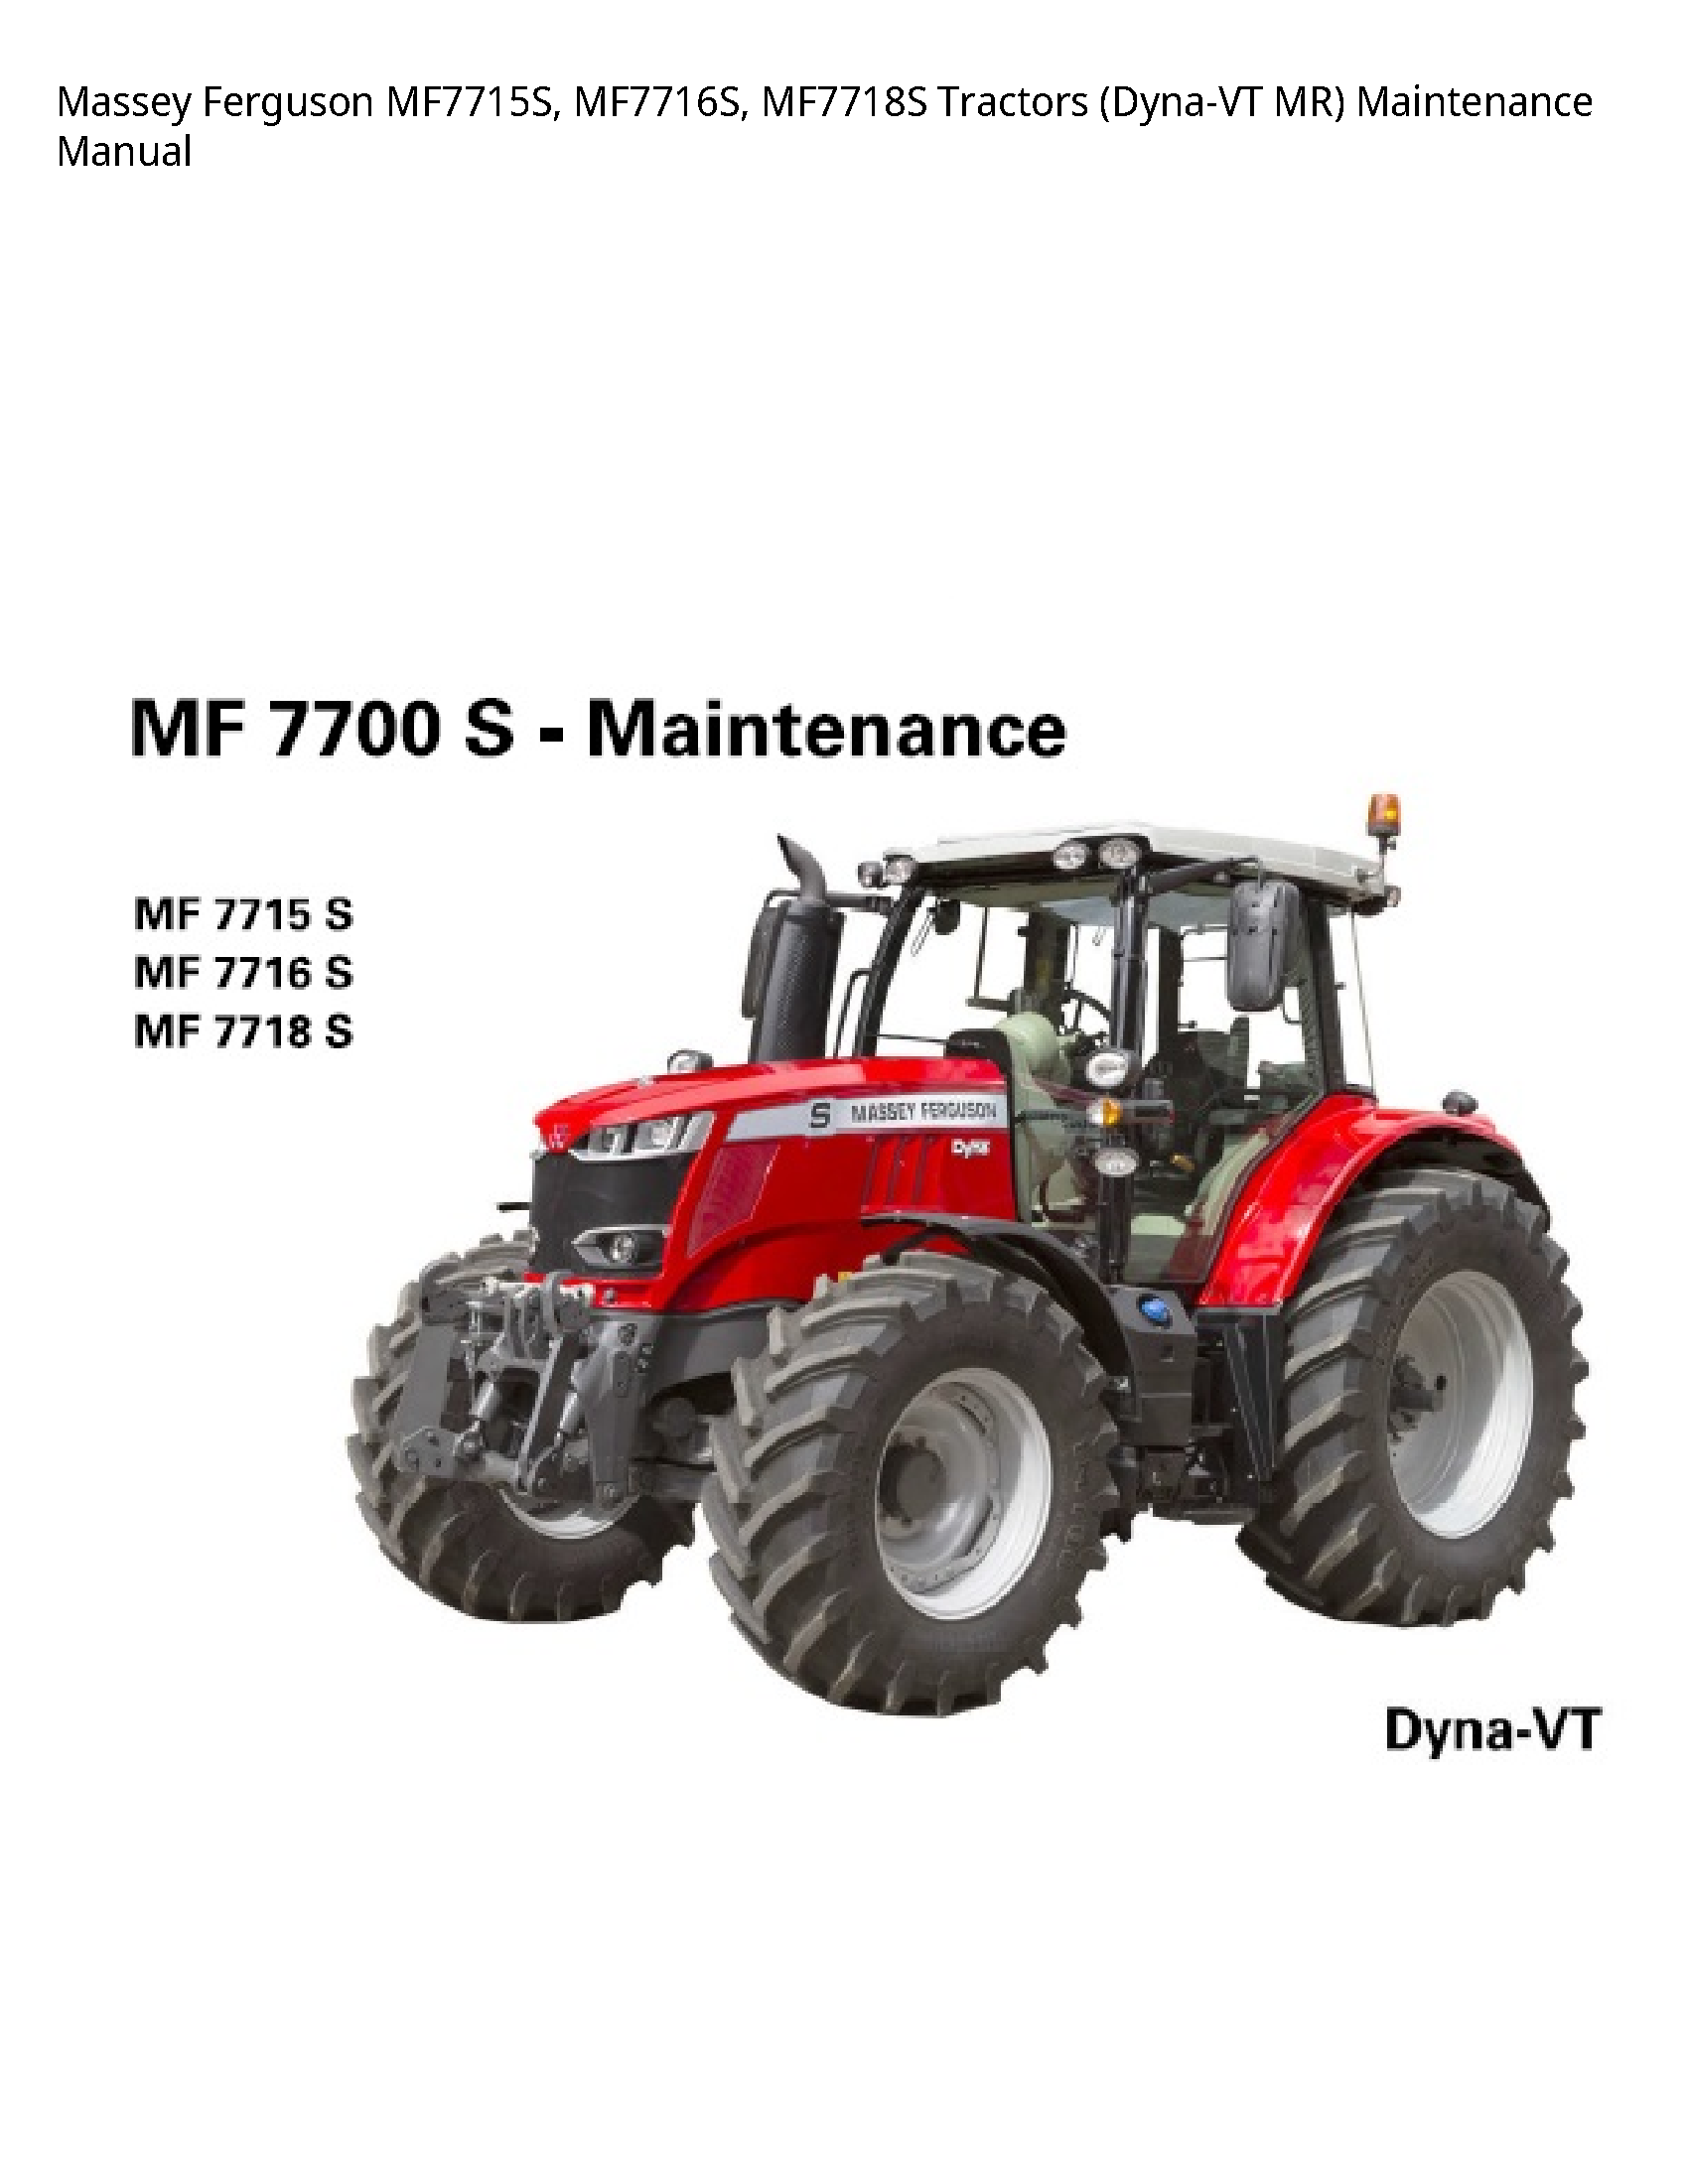 Massey Ferguson MF7715S Tractors (Dyna-VT MR) Maintenance manual